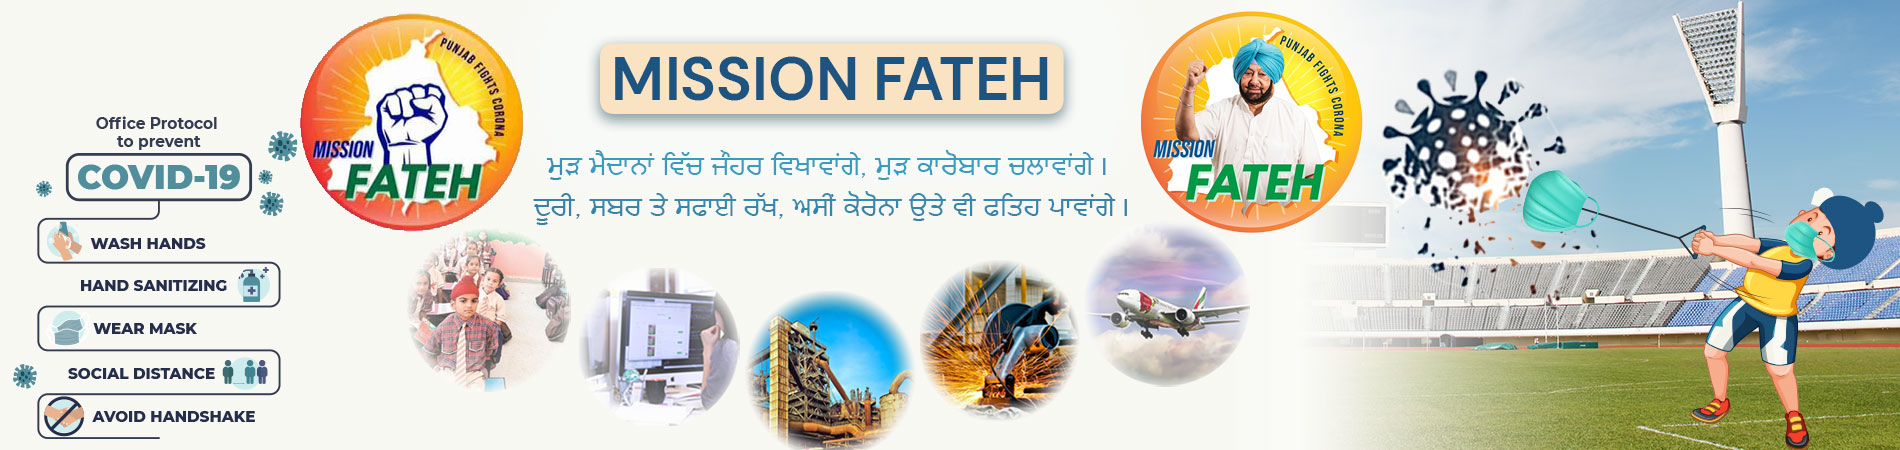 mission-fateh